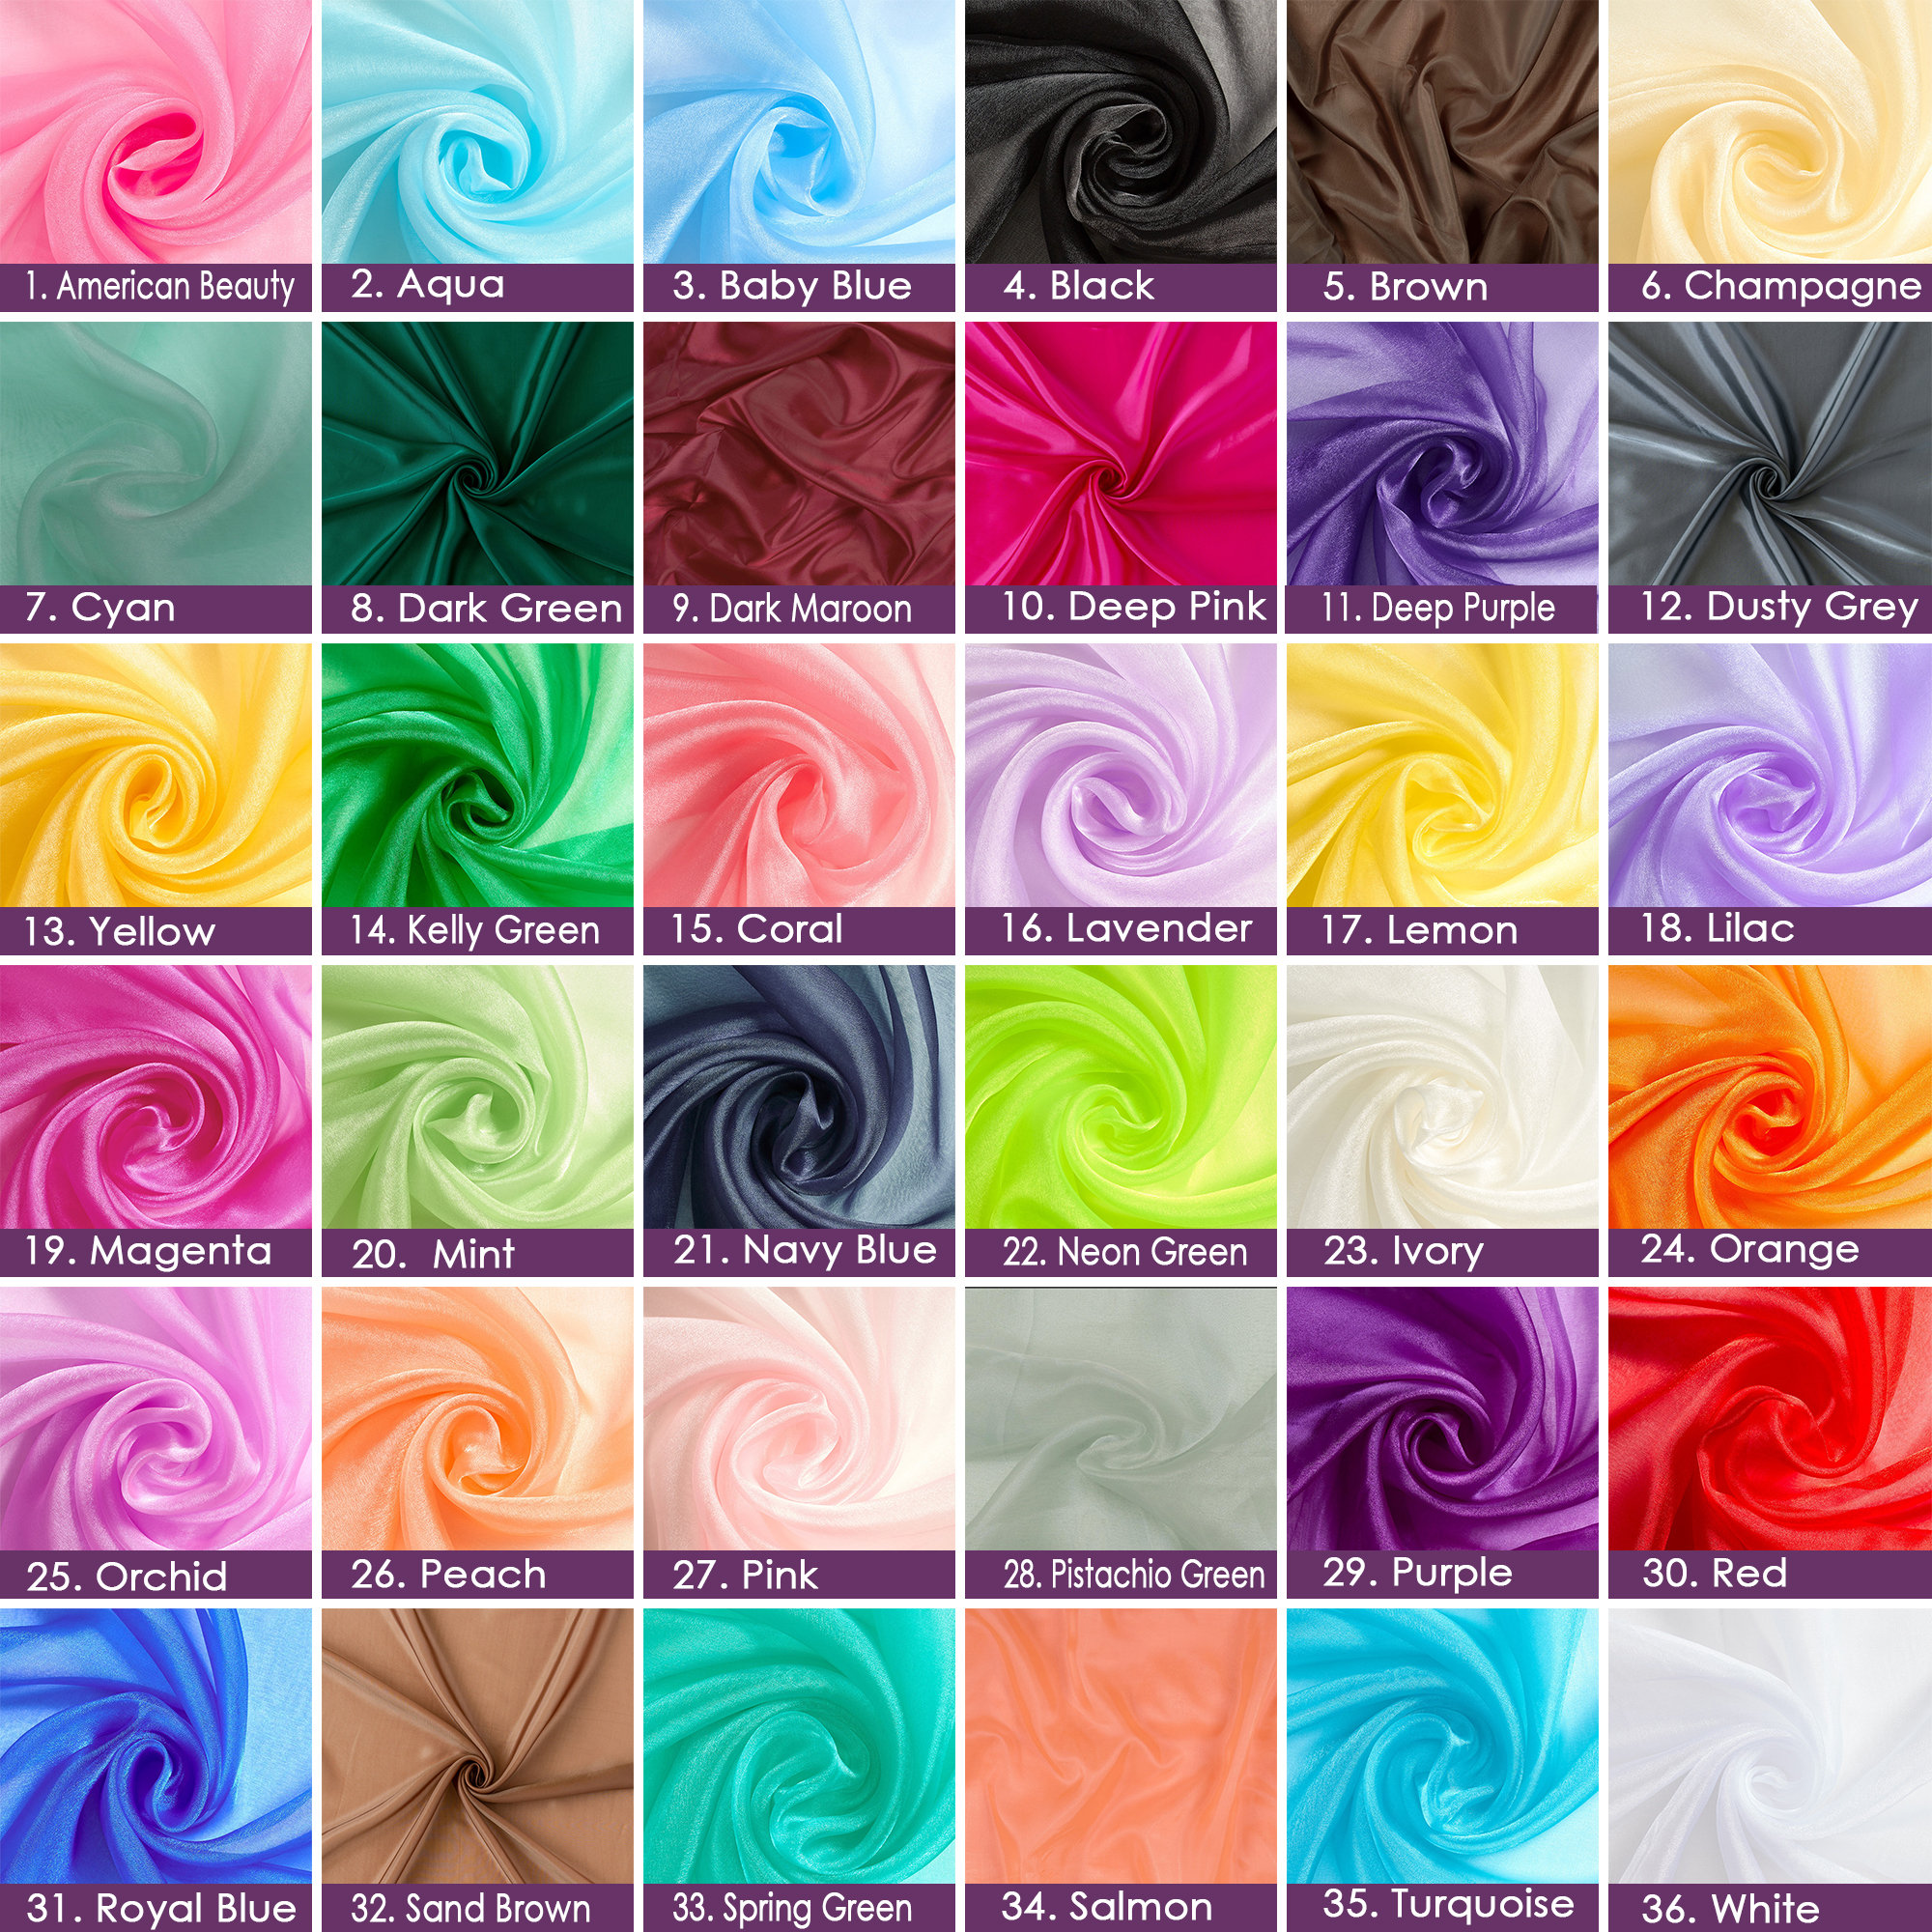 Silk Tissue Organza Fabric Sheer Burgundy Color 44 ~wide –